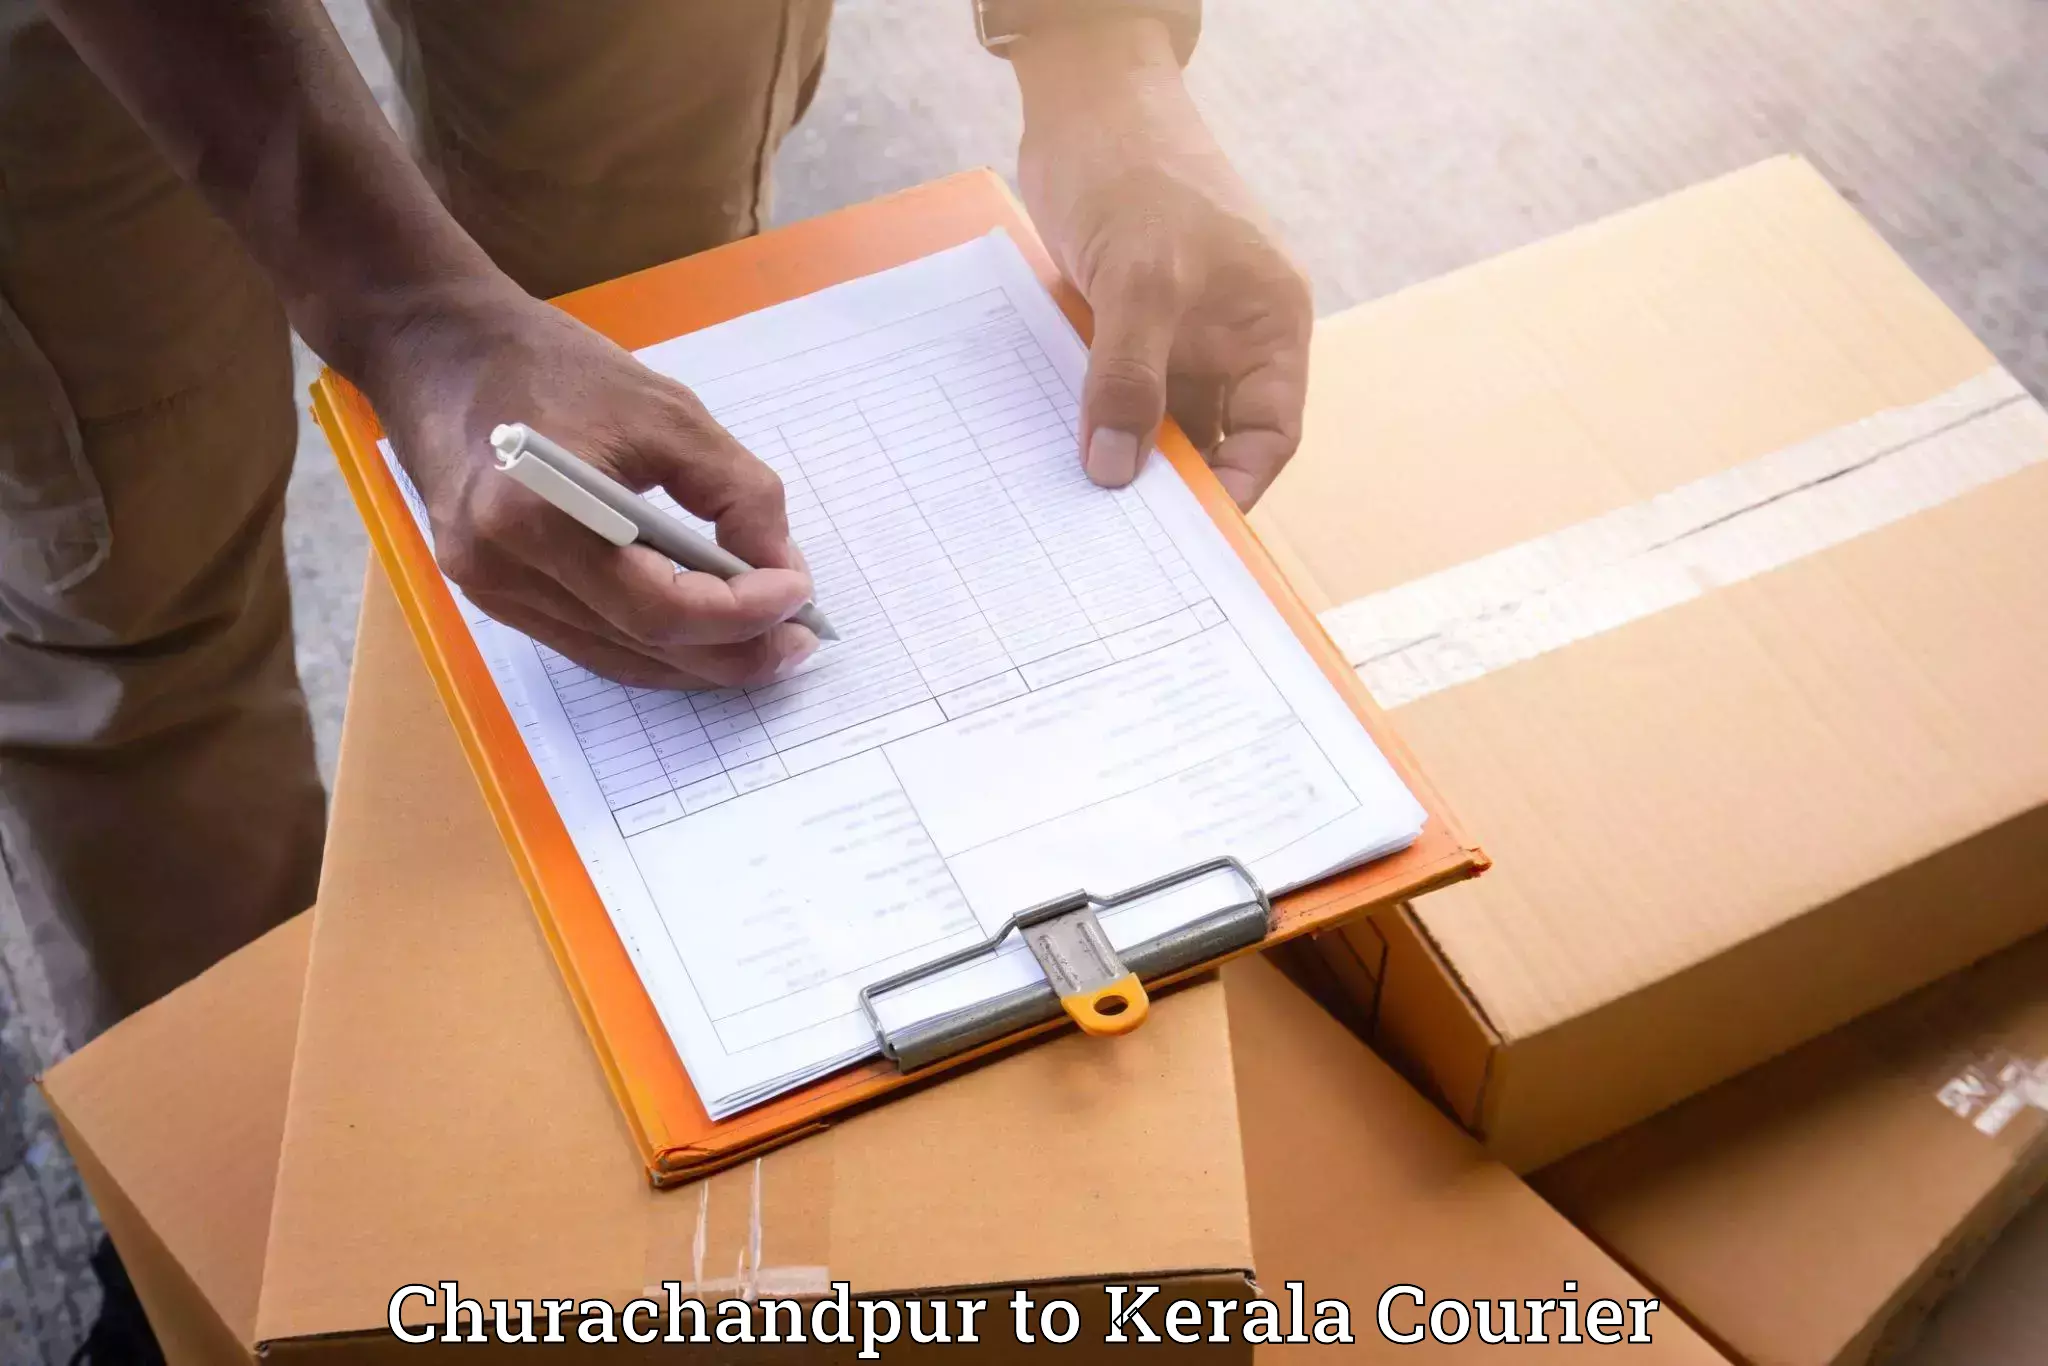 Furniture transport specialists Churachandpur to Calicut